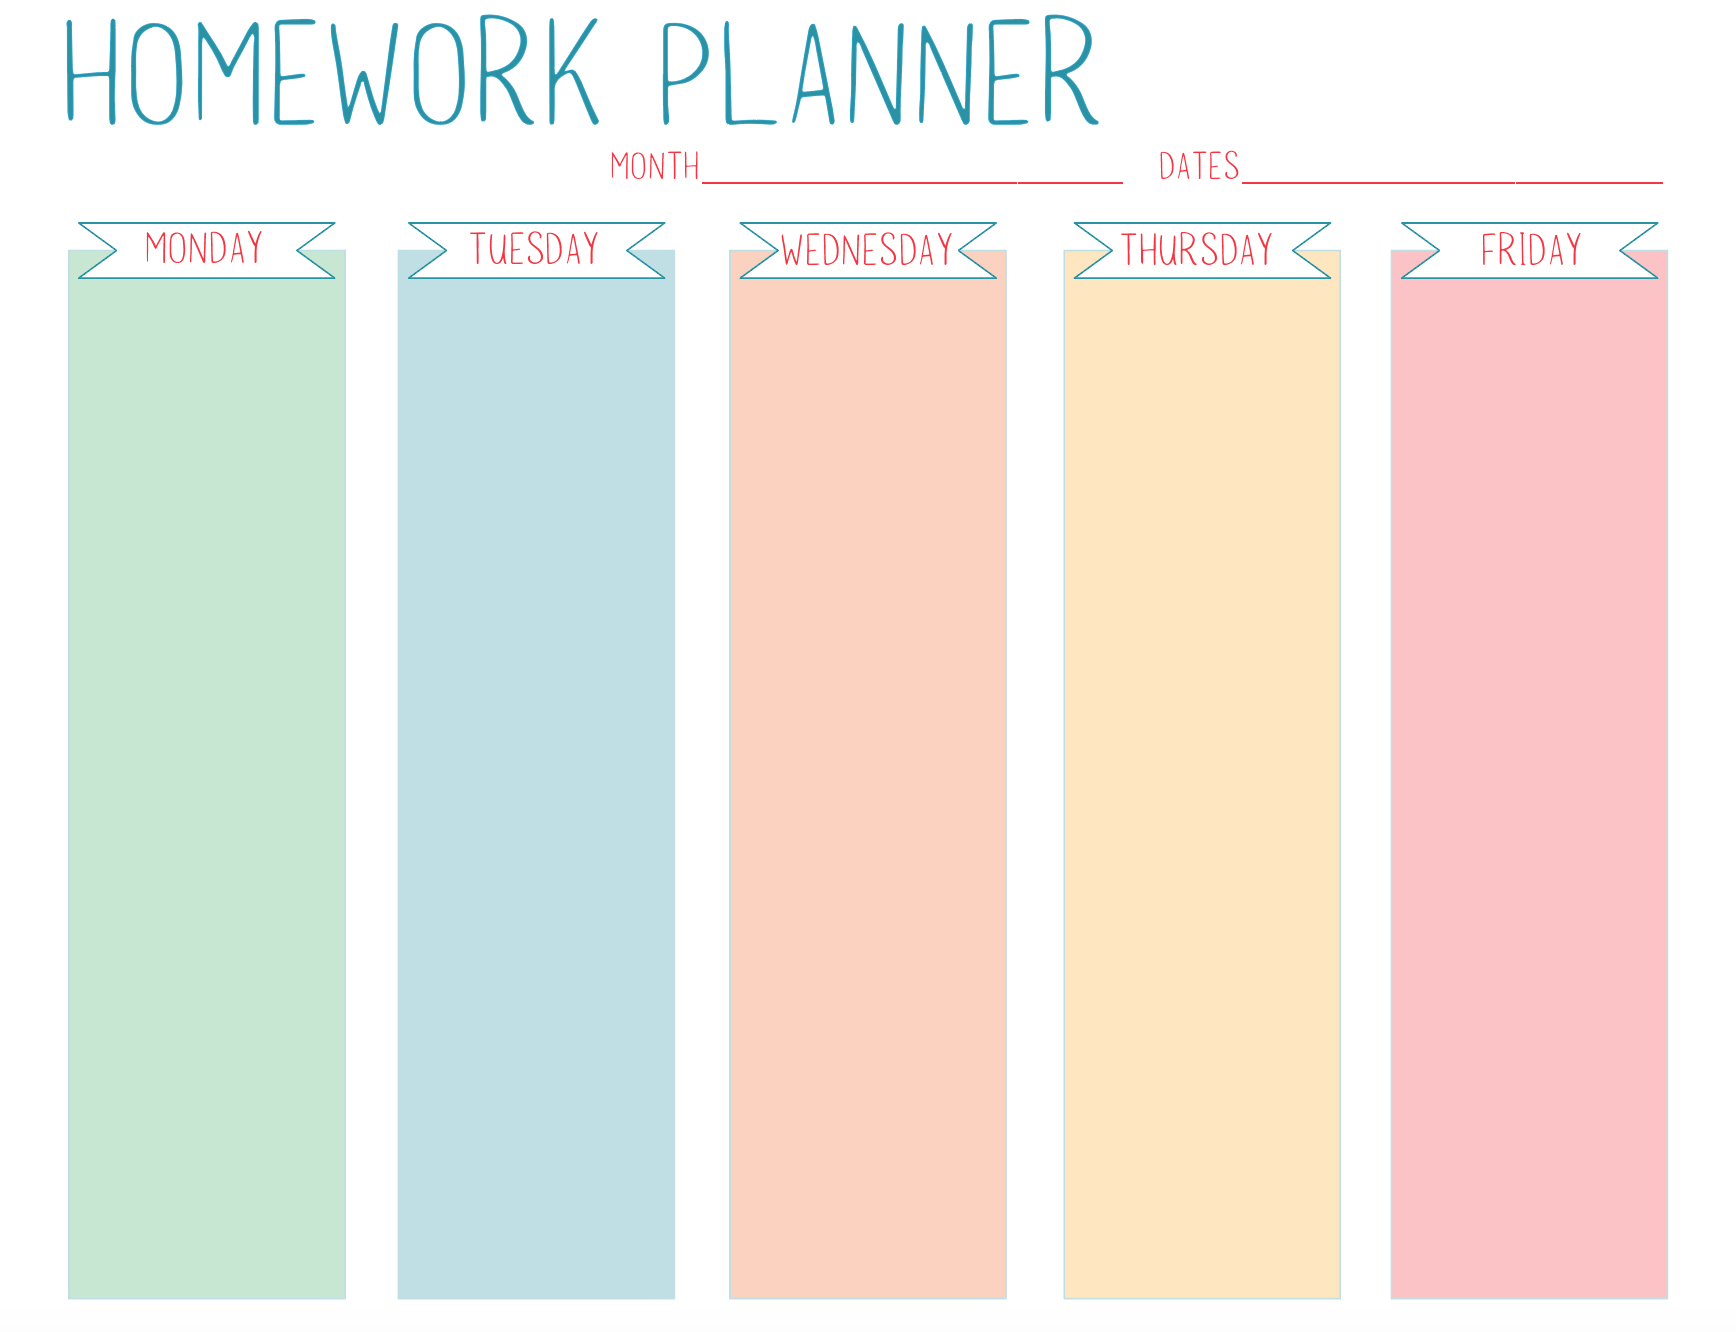 Free Printable Homework Planner For Students | Simply Being Mommy - Free Printable Homework